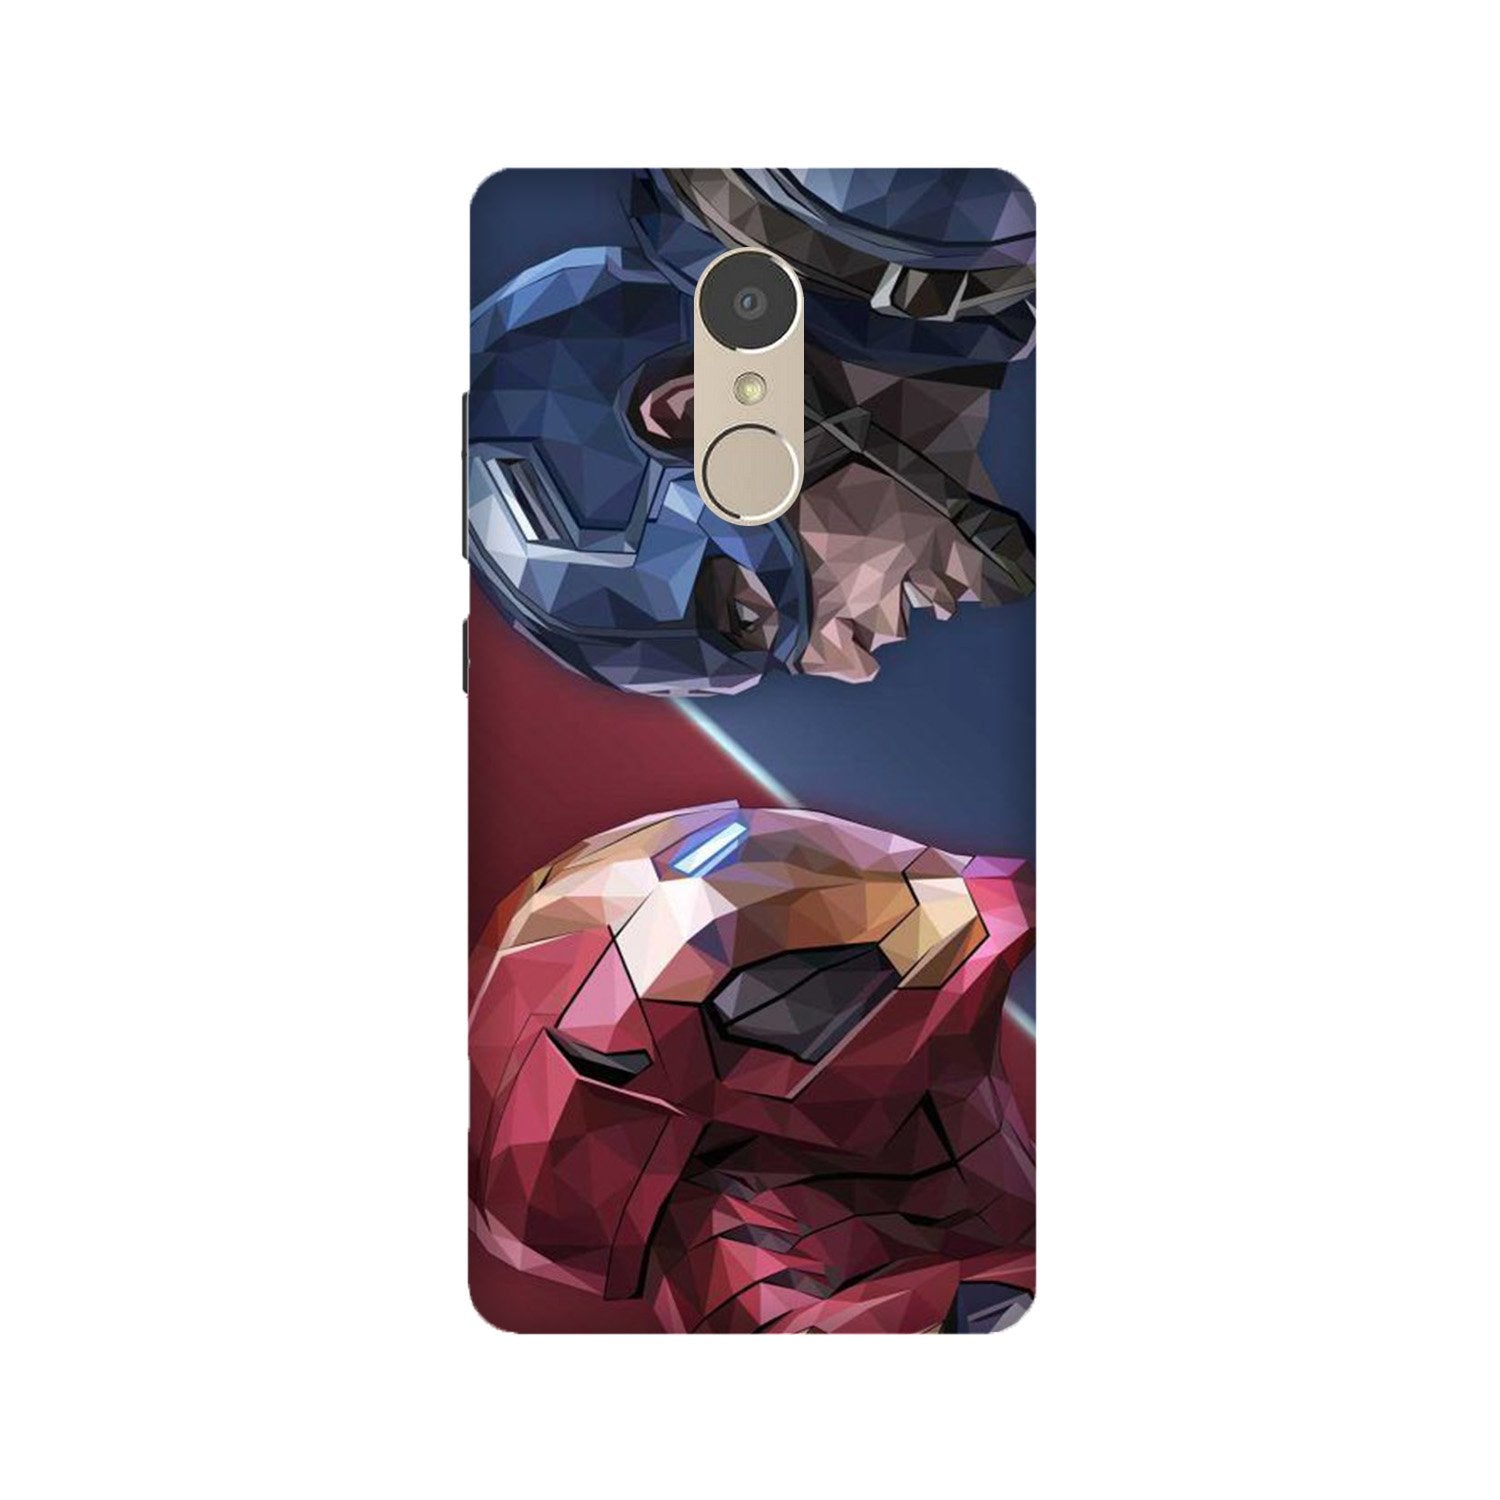 Ironman Captain America Case for Lenovo K6 Note (Design No. 245)